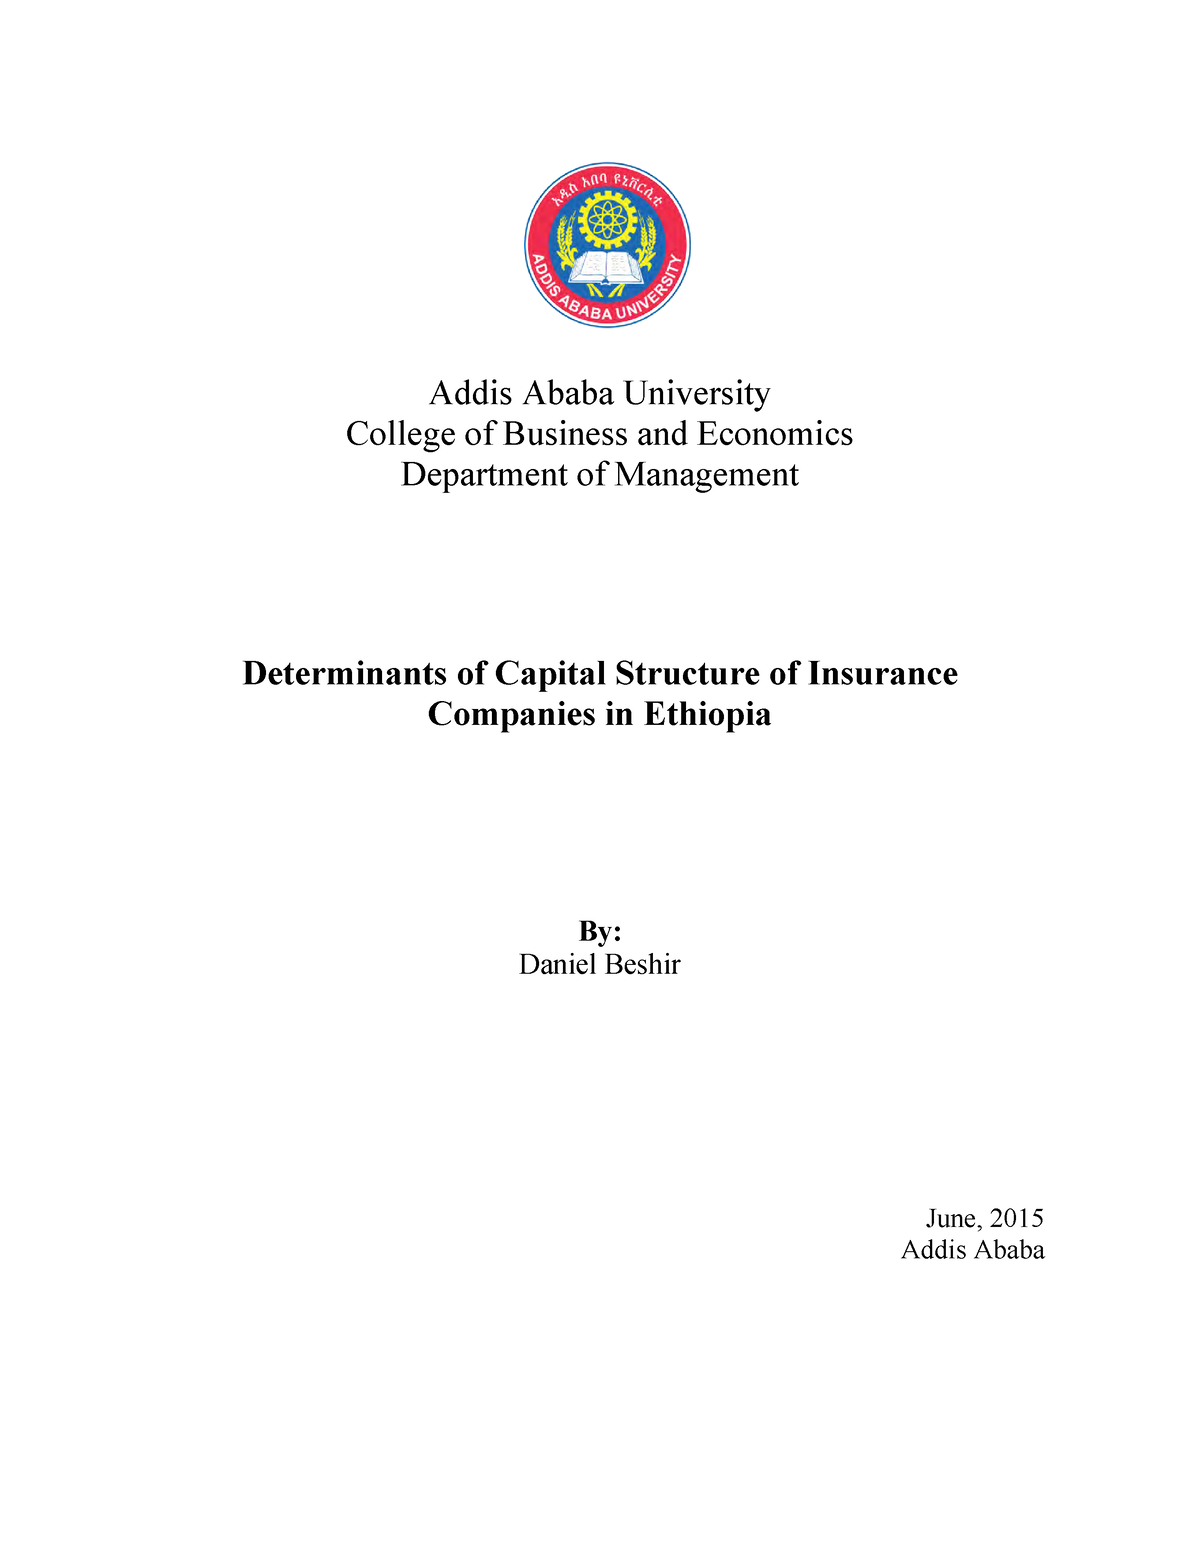 mba thesis addis ababa university pdf download